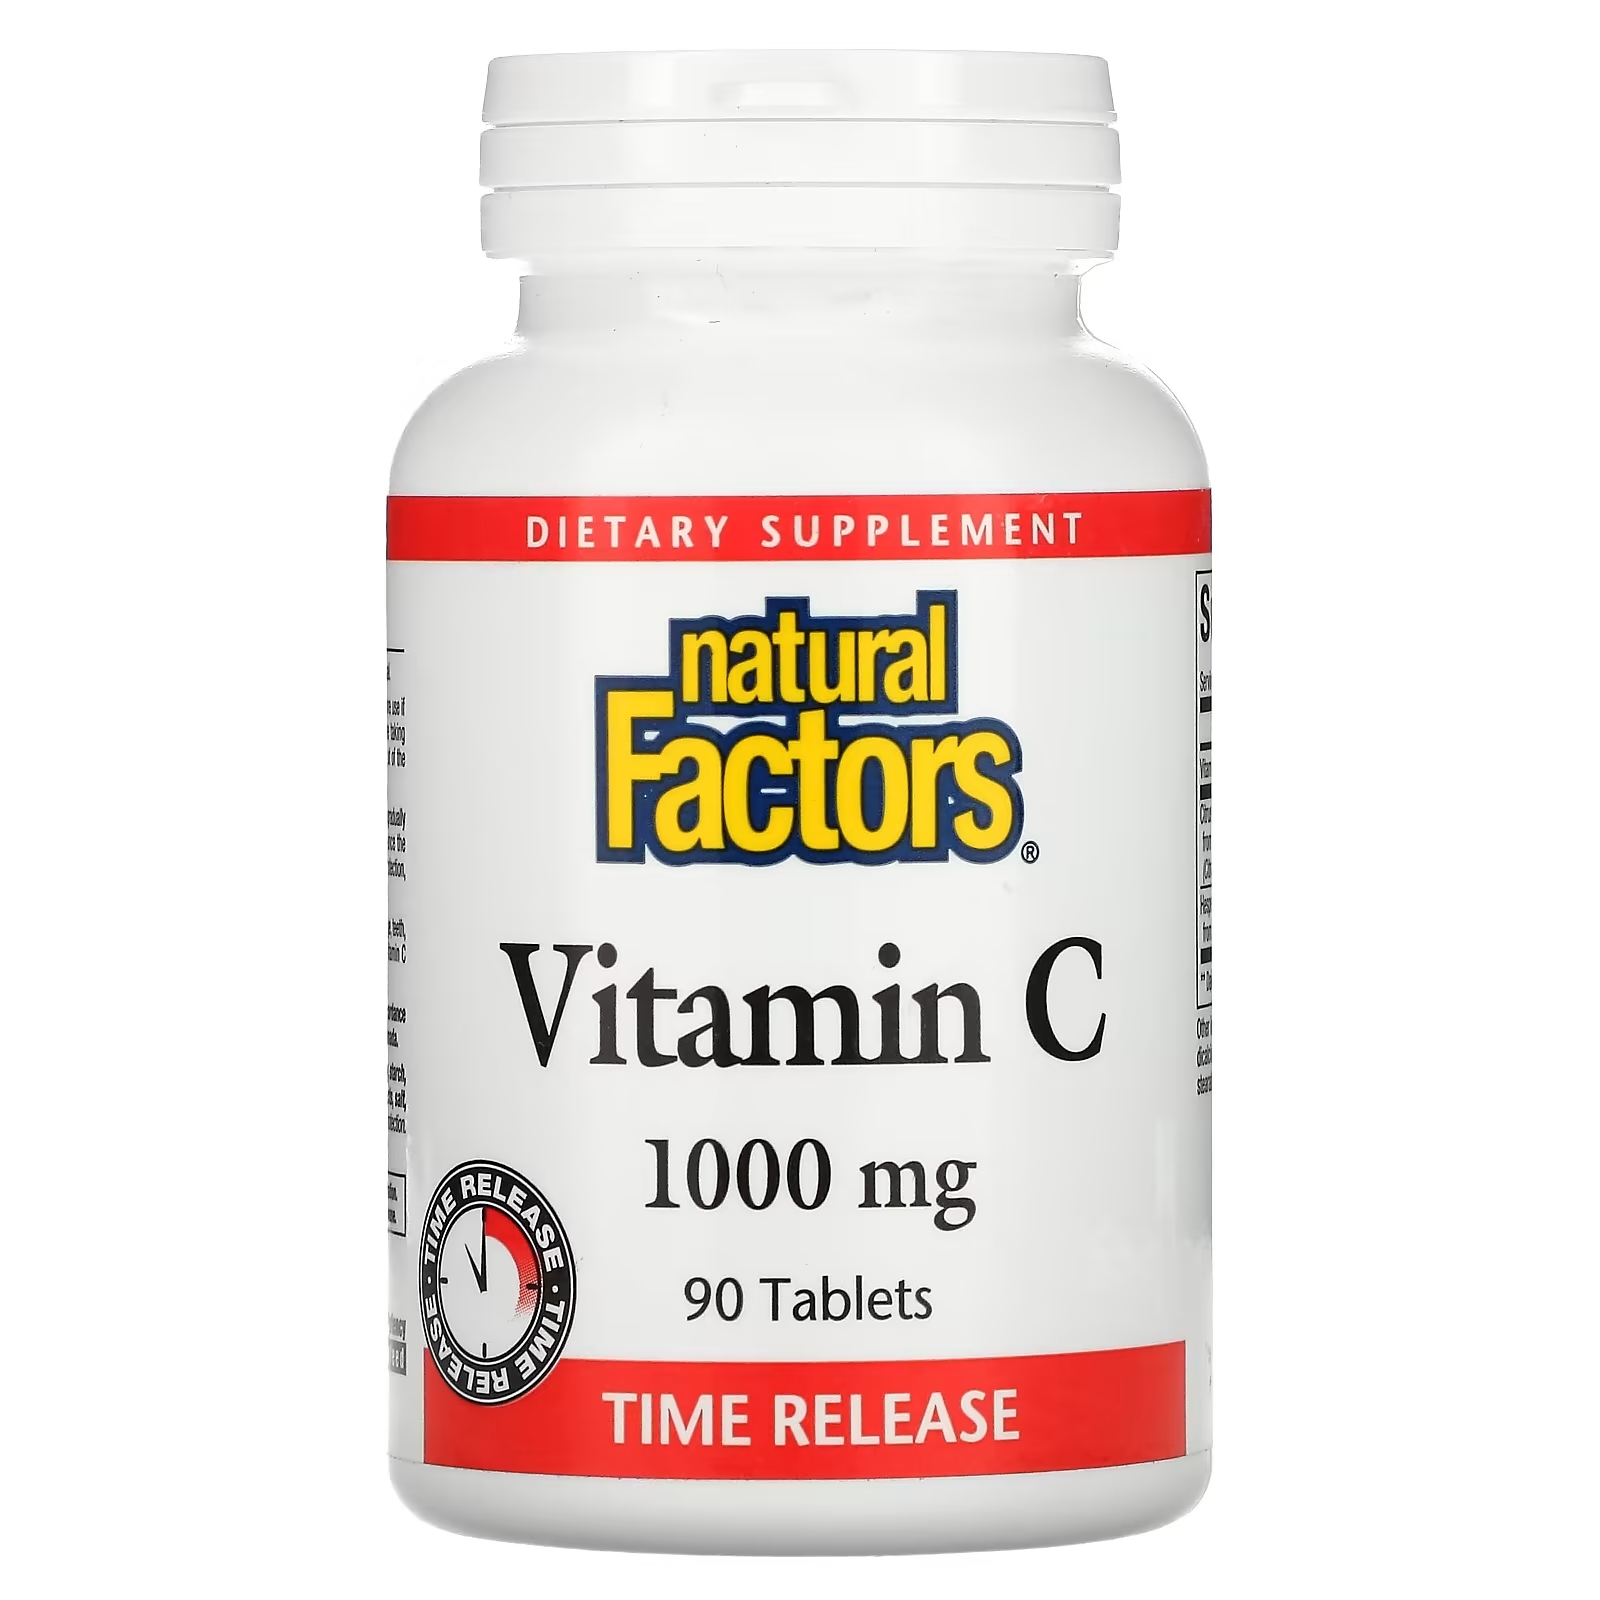 Natural Factors витамин C 1000 мг с медленным высвобождением, 90 таблеток natural factors same дисульфат тозилат 200 мг 60 таблеток с медленным высвобождением